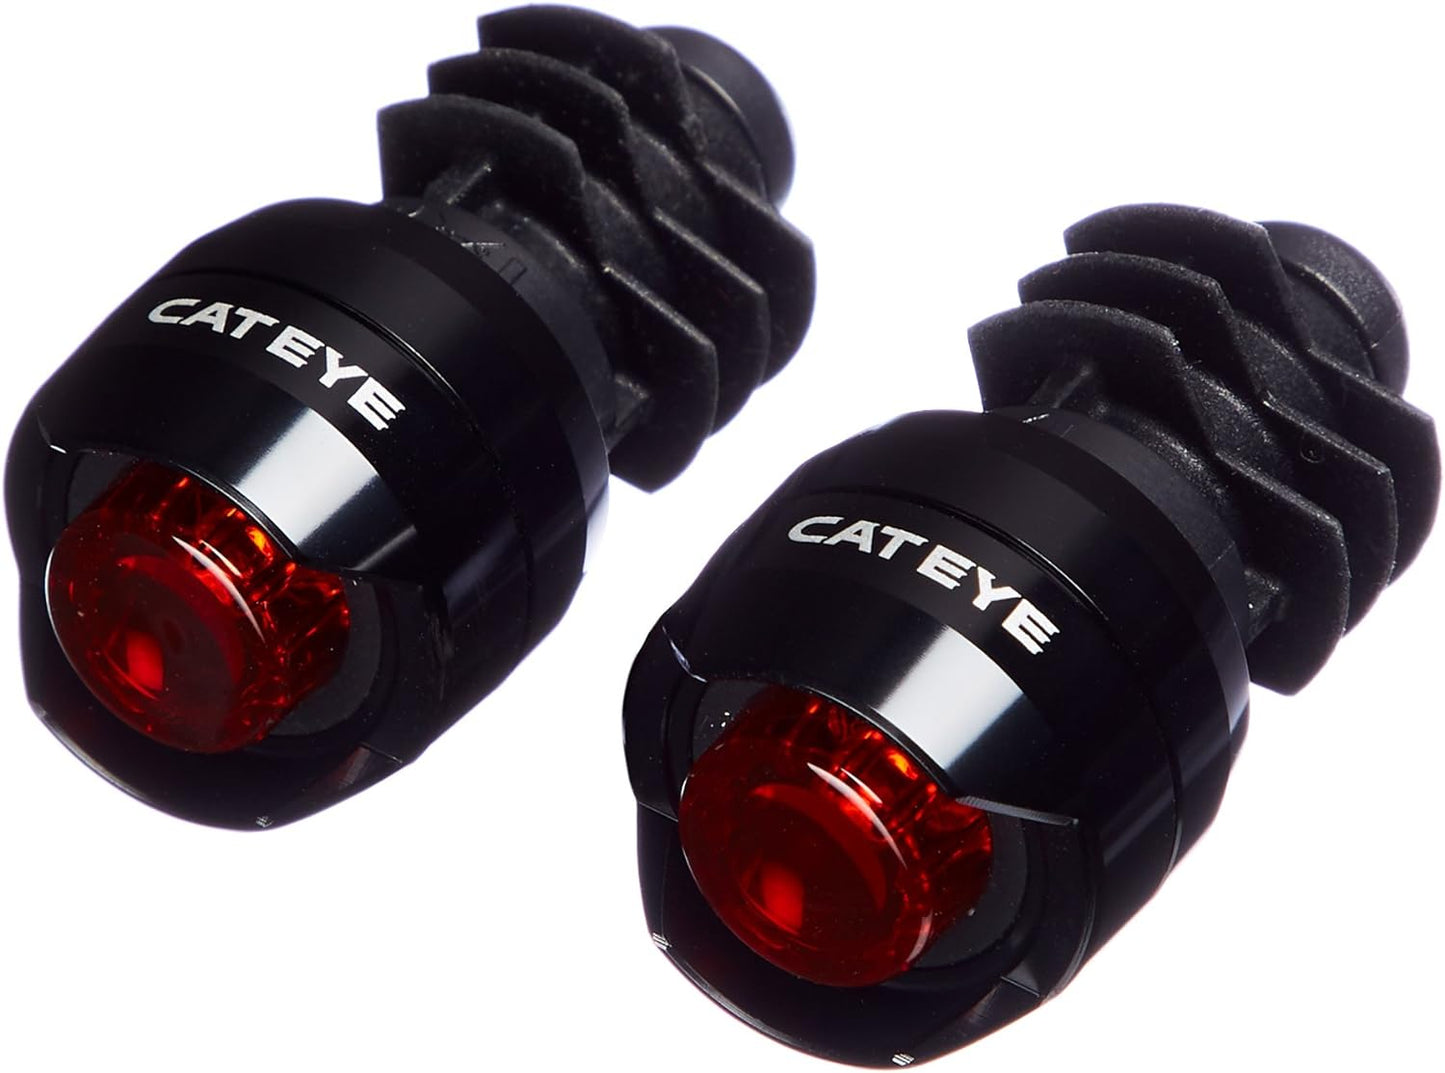 Cateye bar end lights